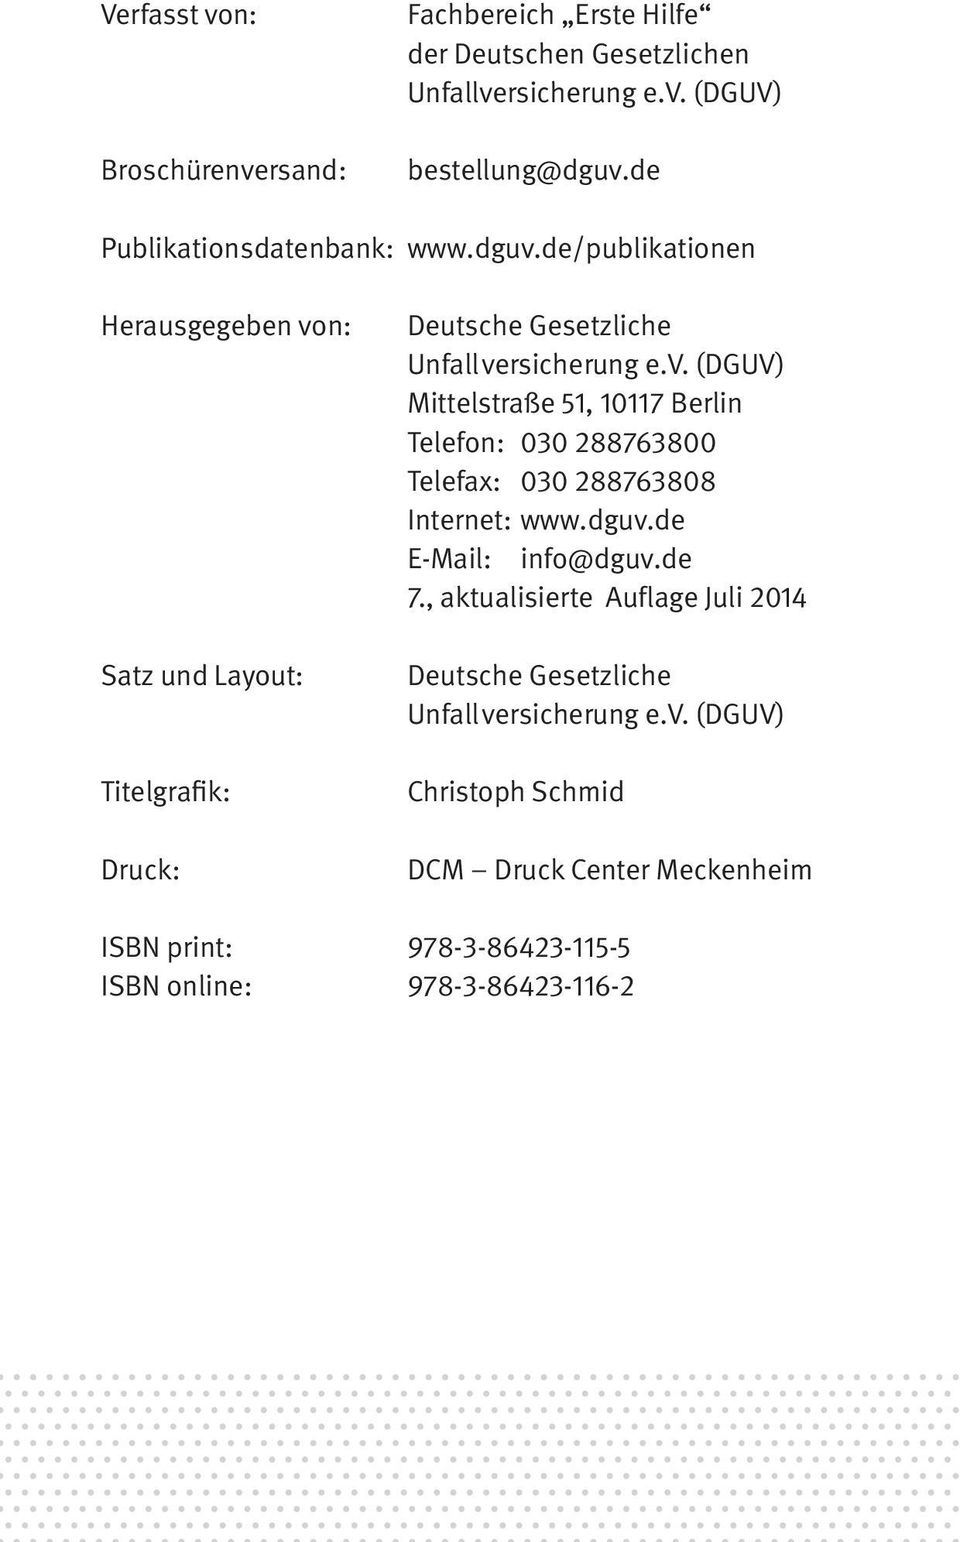 v. (DGUV) Mittelstraße 51, 10117 Berlin Telefon: 030 288763800 Telefax: 030 288763808 Internet: www.dguv.de E-Mail: info@dguv.de 7.